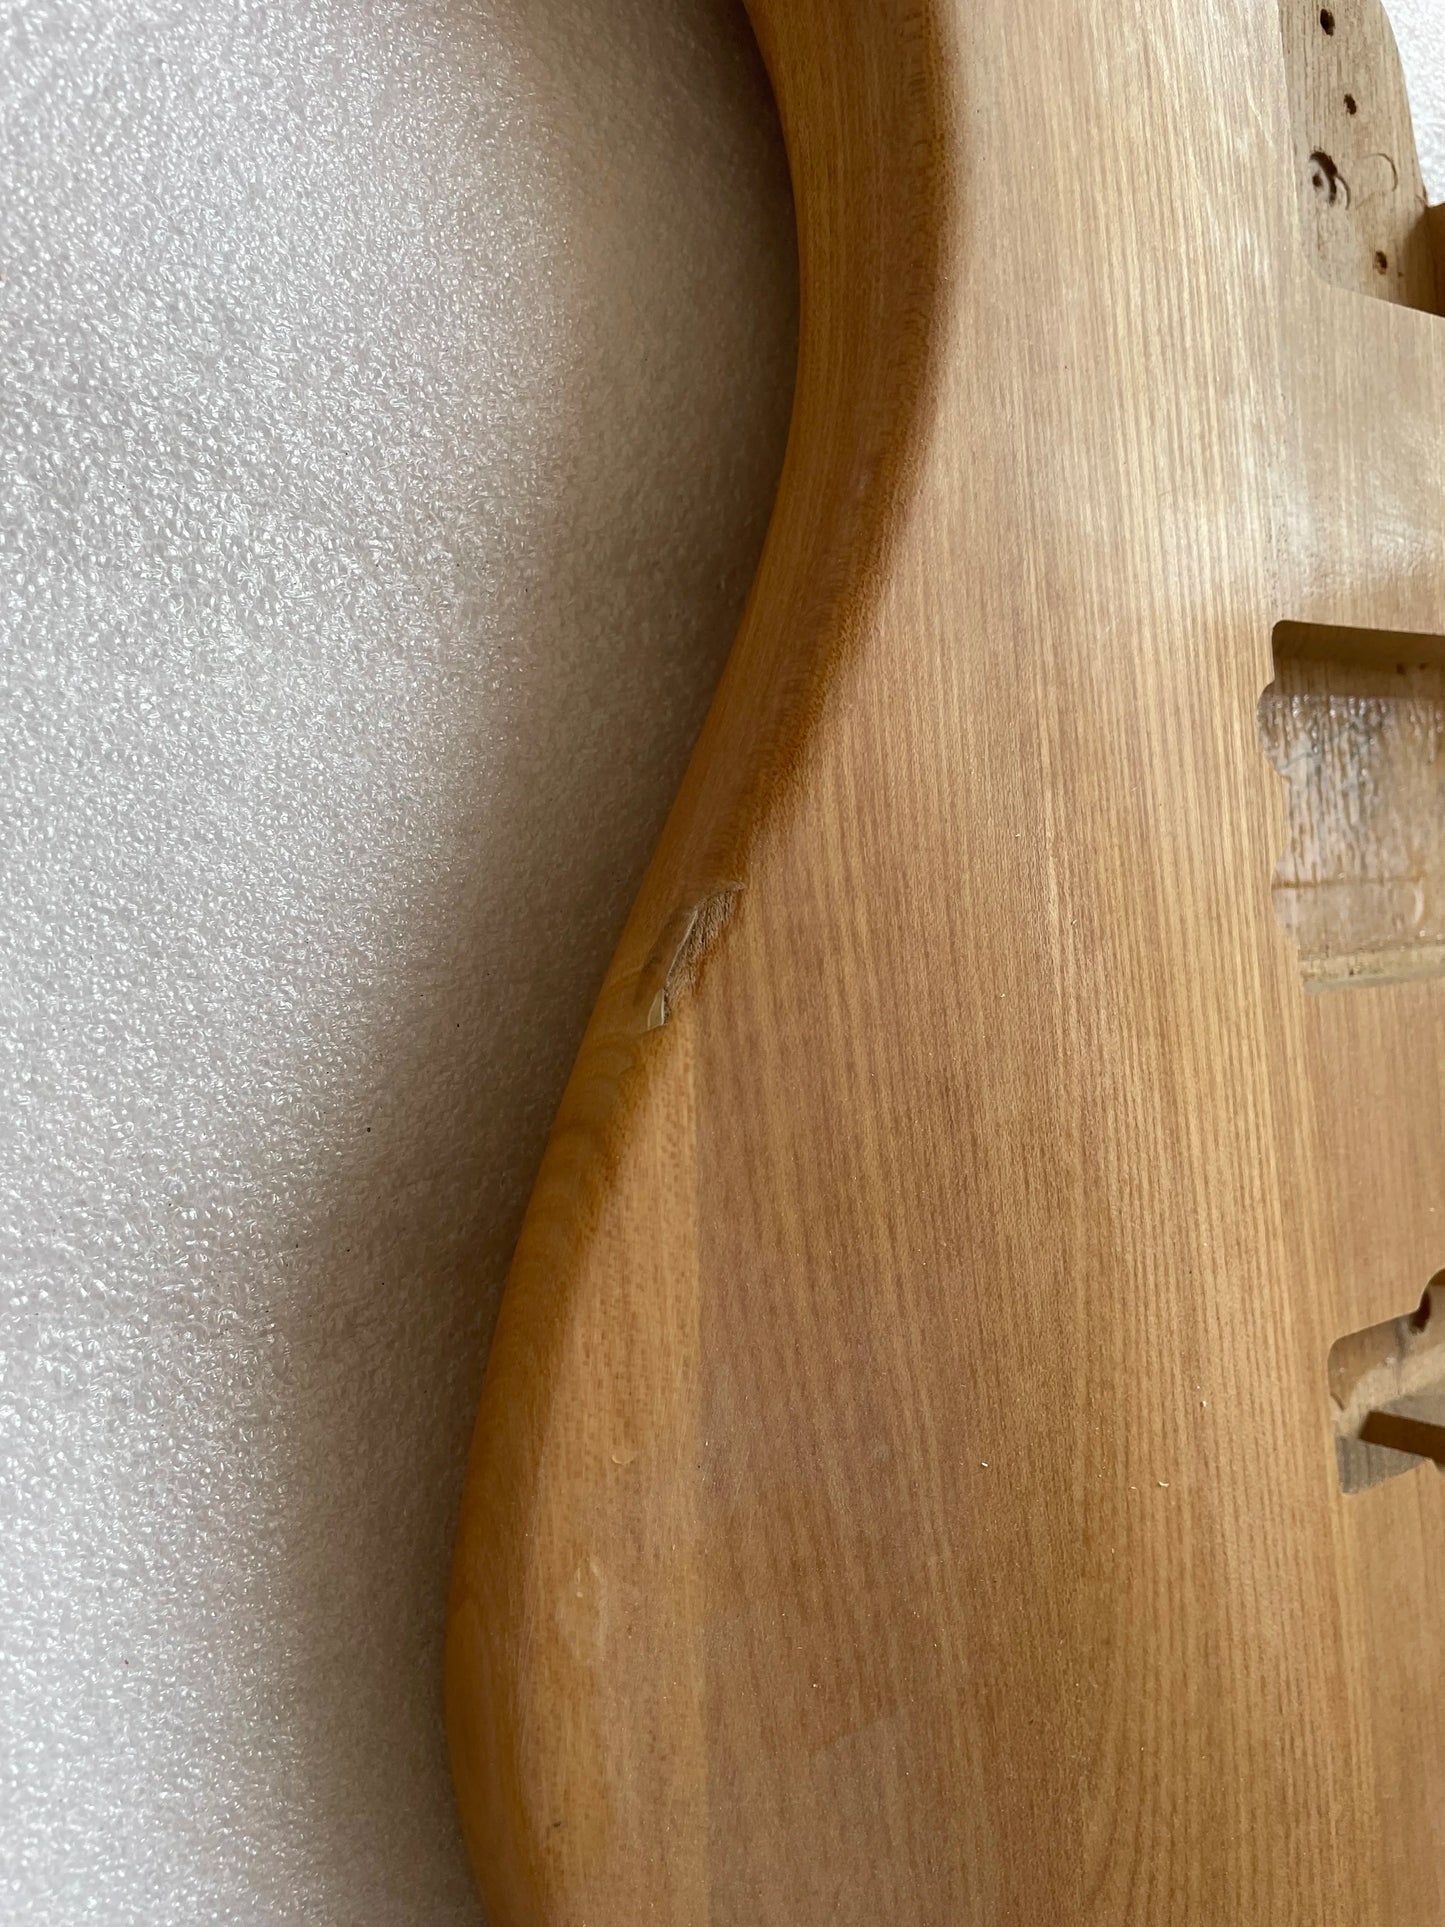 4 String Ash Wood Bass Guitar Body DIY Project